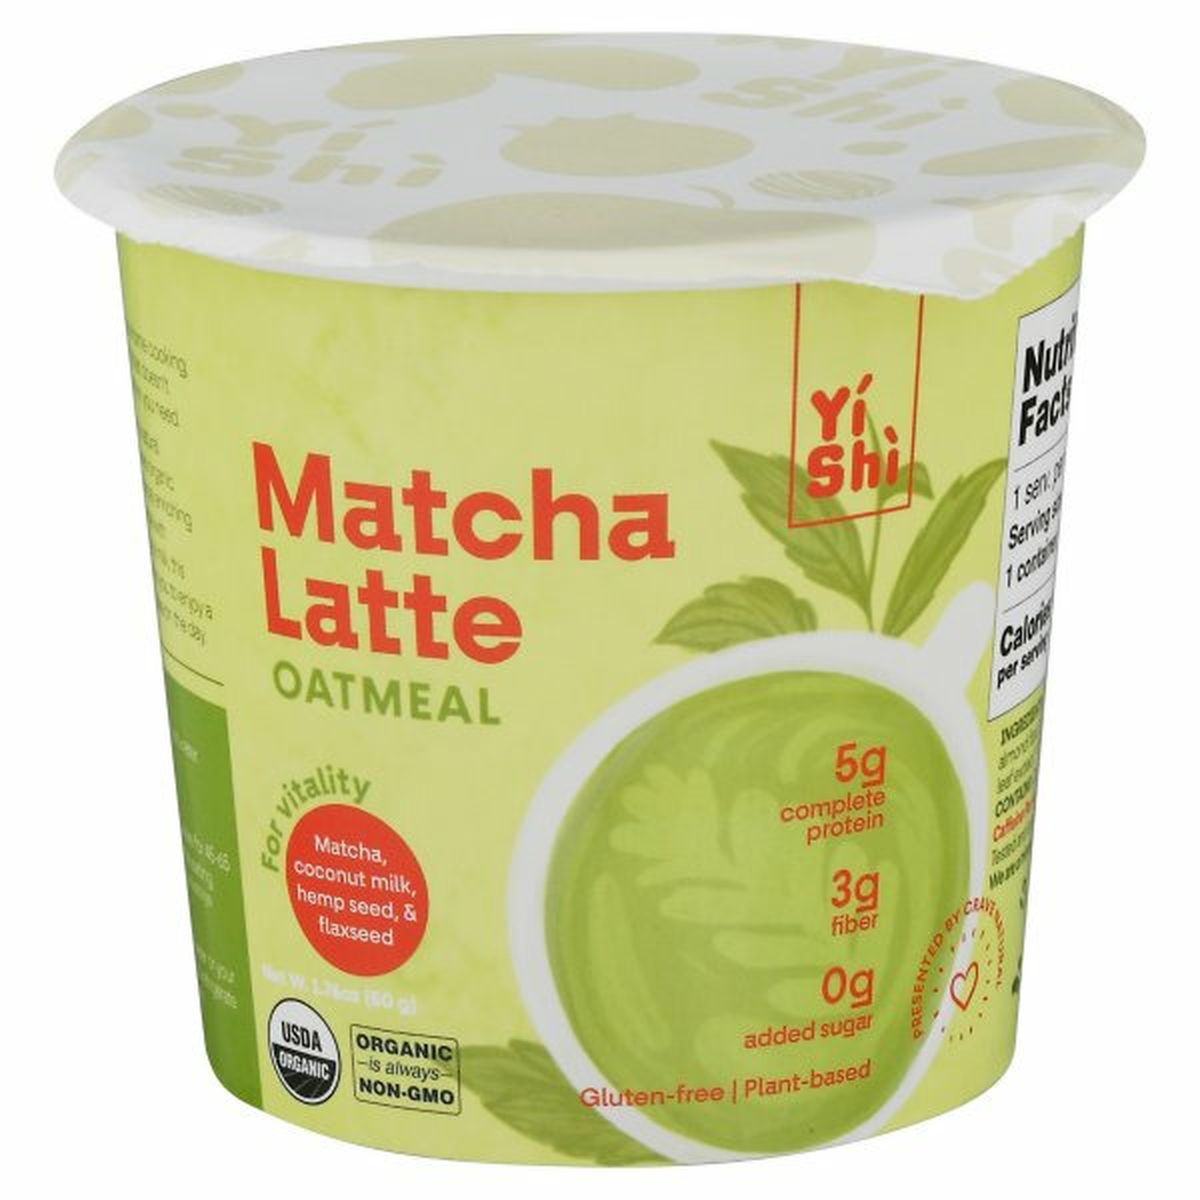 Calories in Yishi Oatmeal, Matcha Latte